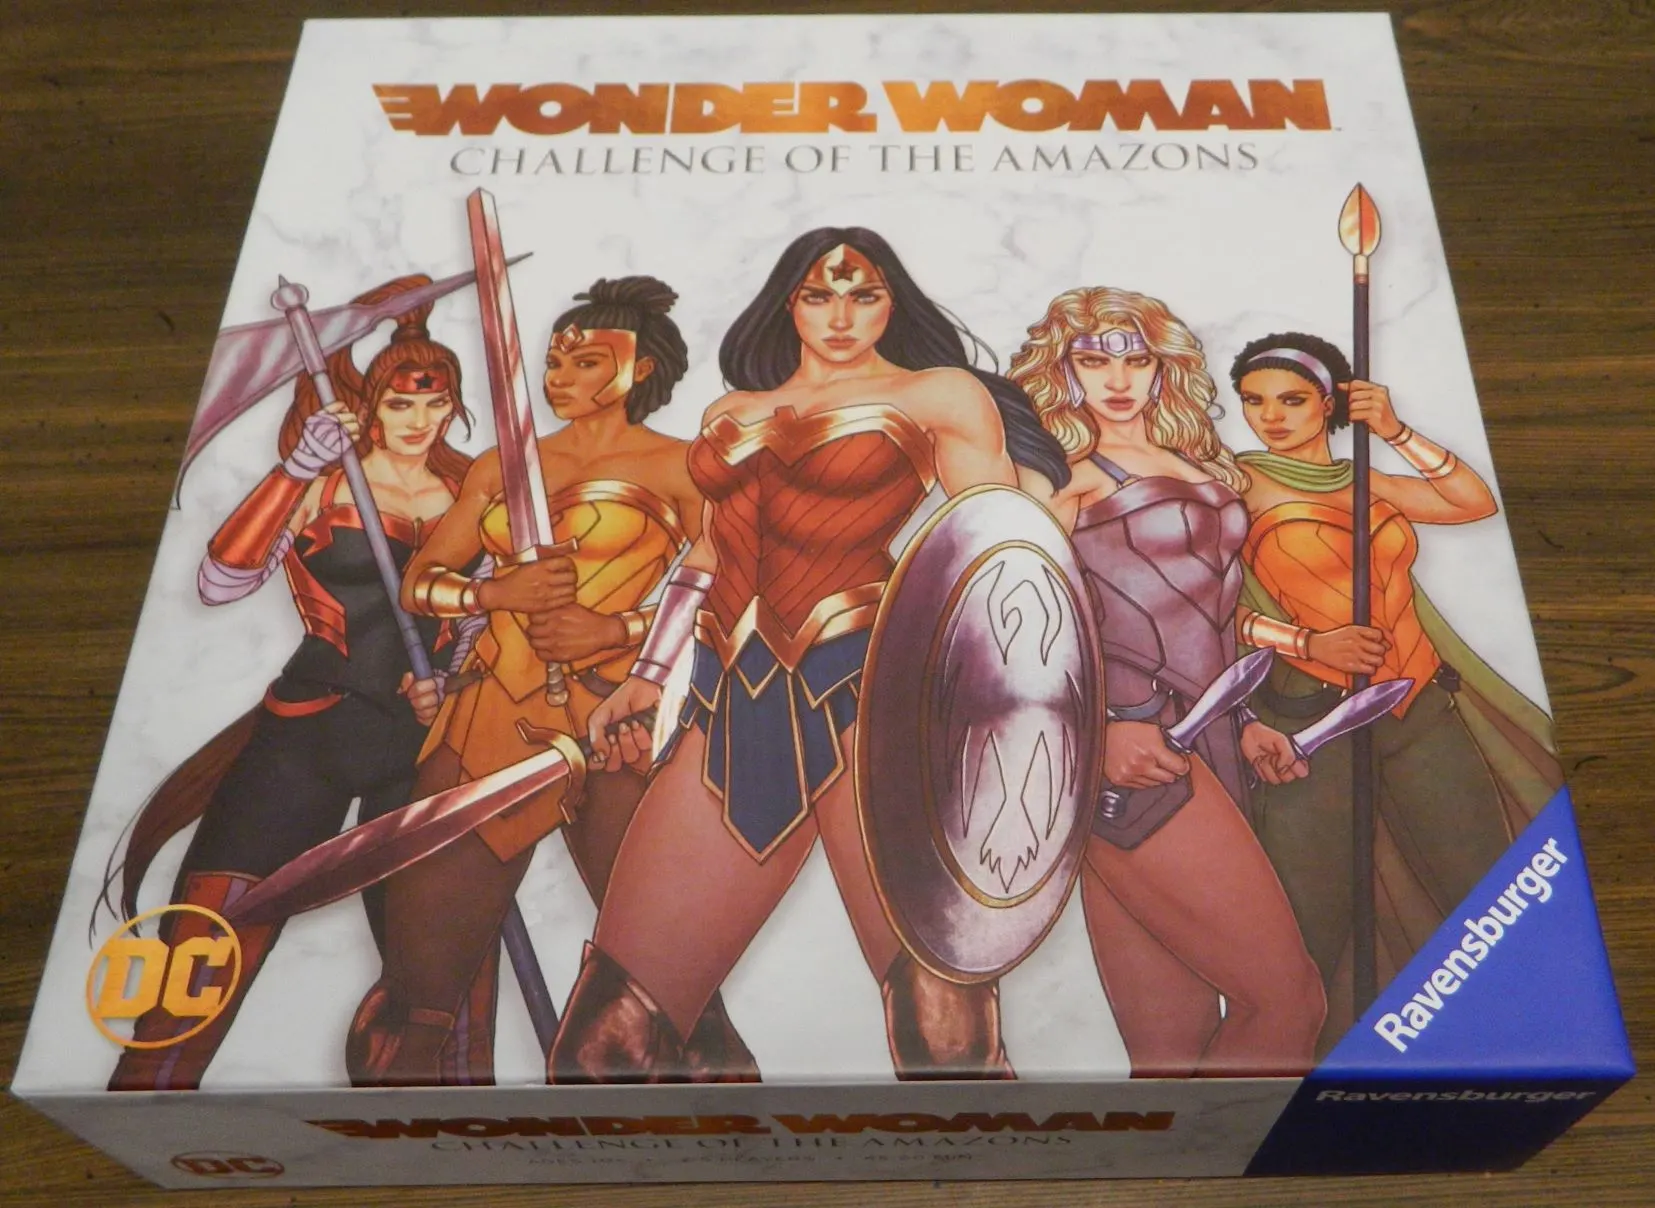 Wonder Woman the game